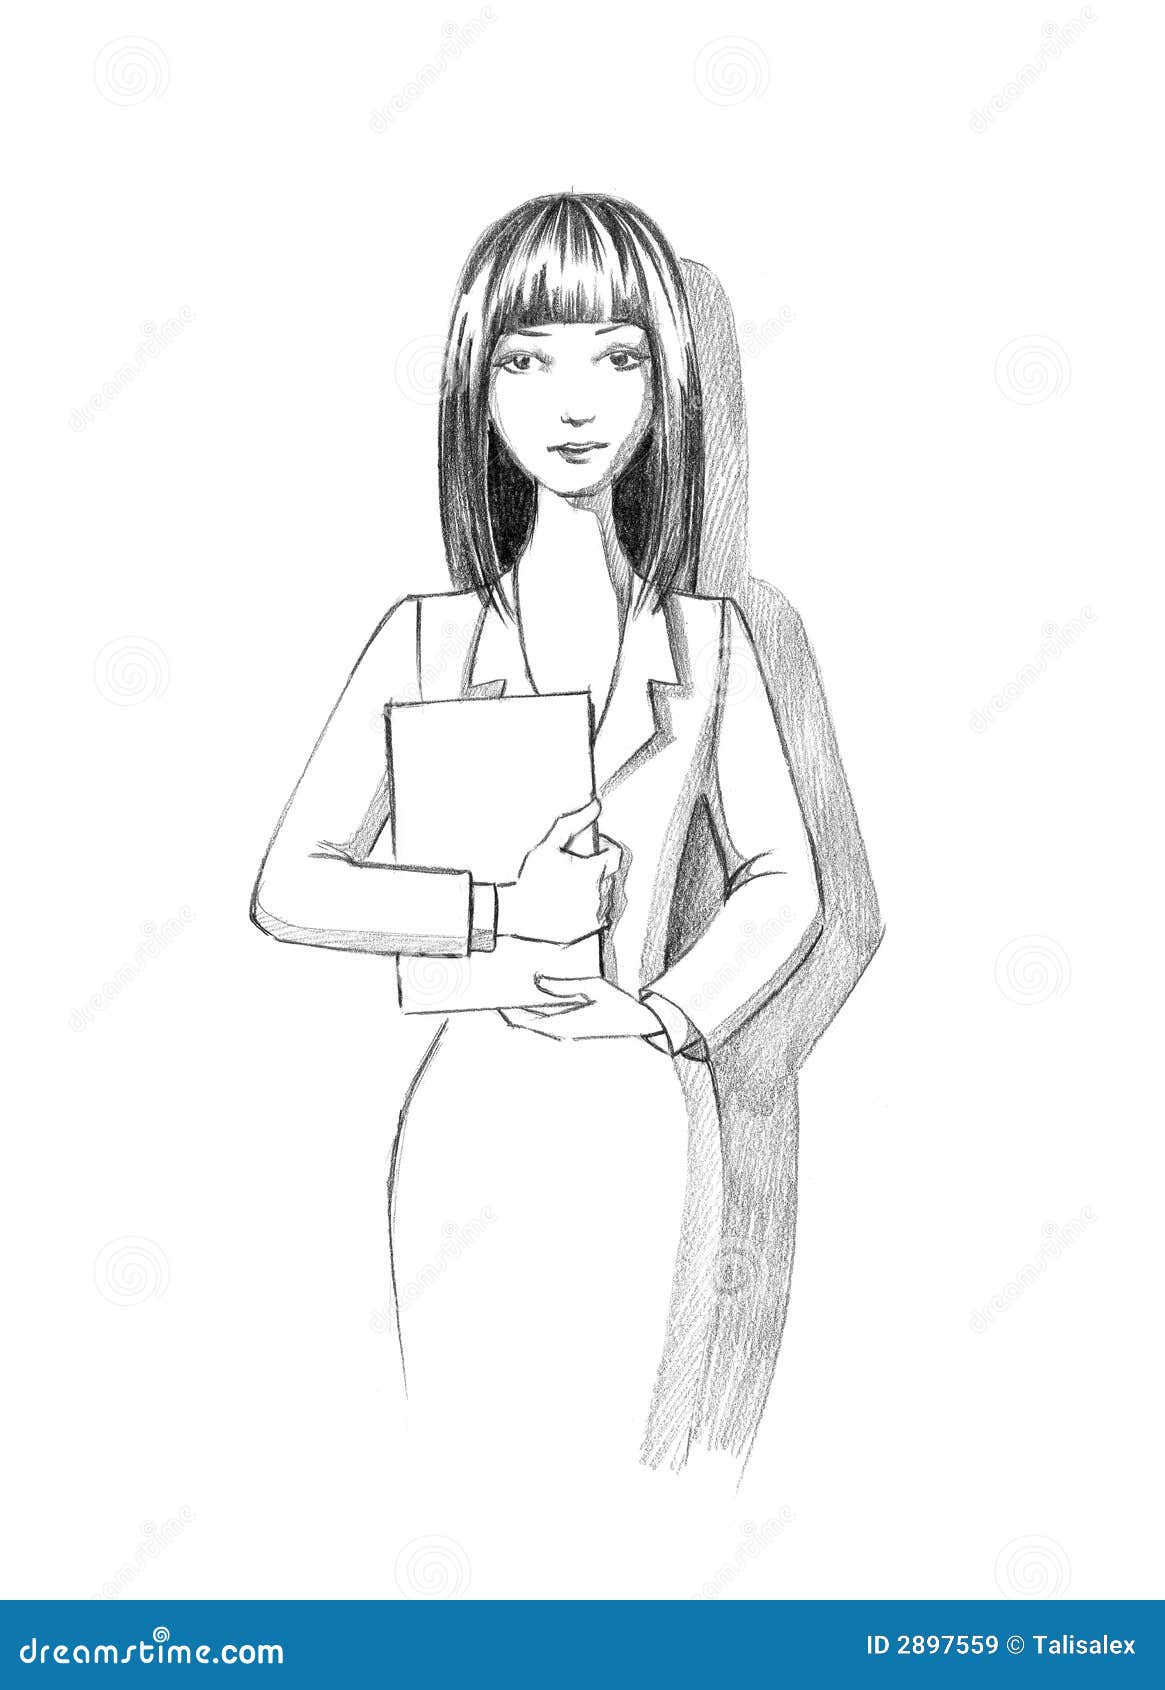 Business woman sketch stock illustration. Illustration of modern ...